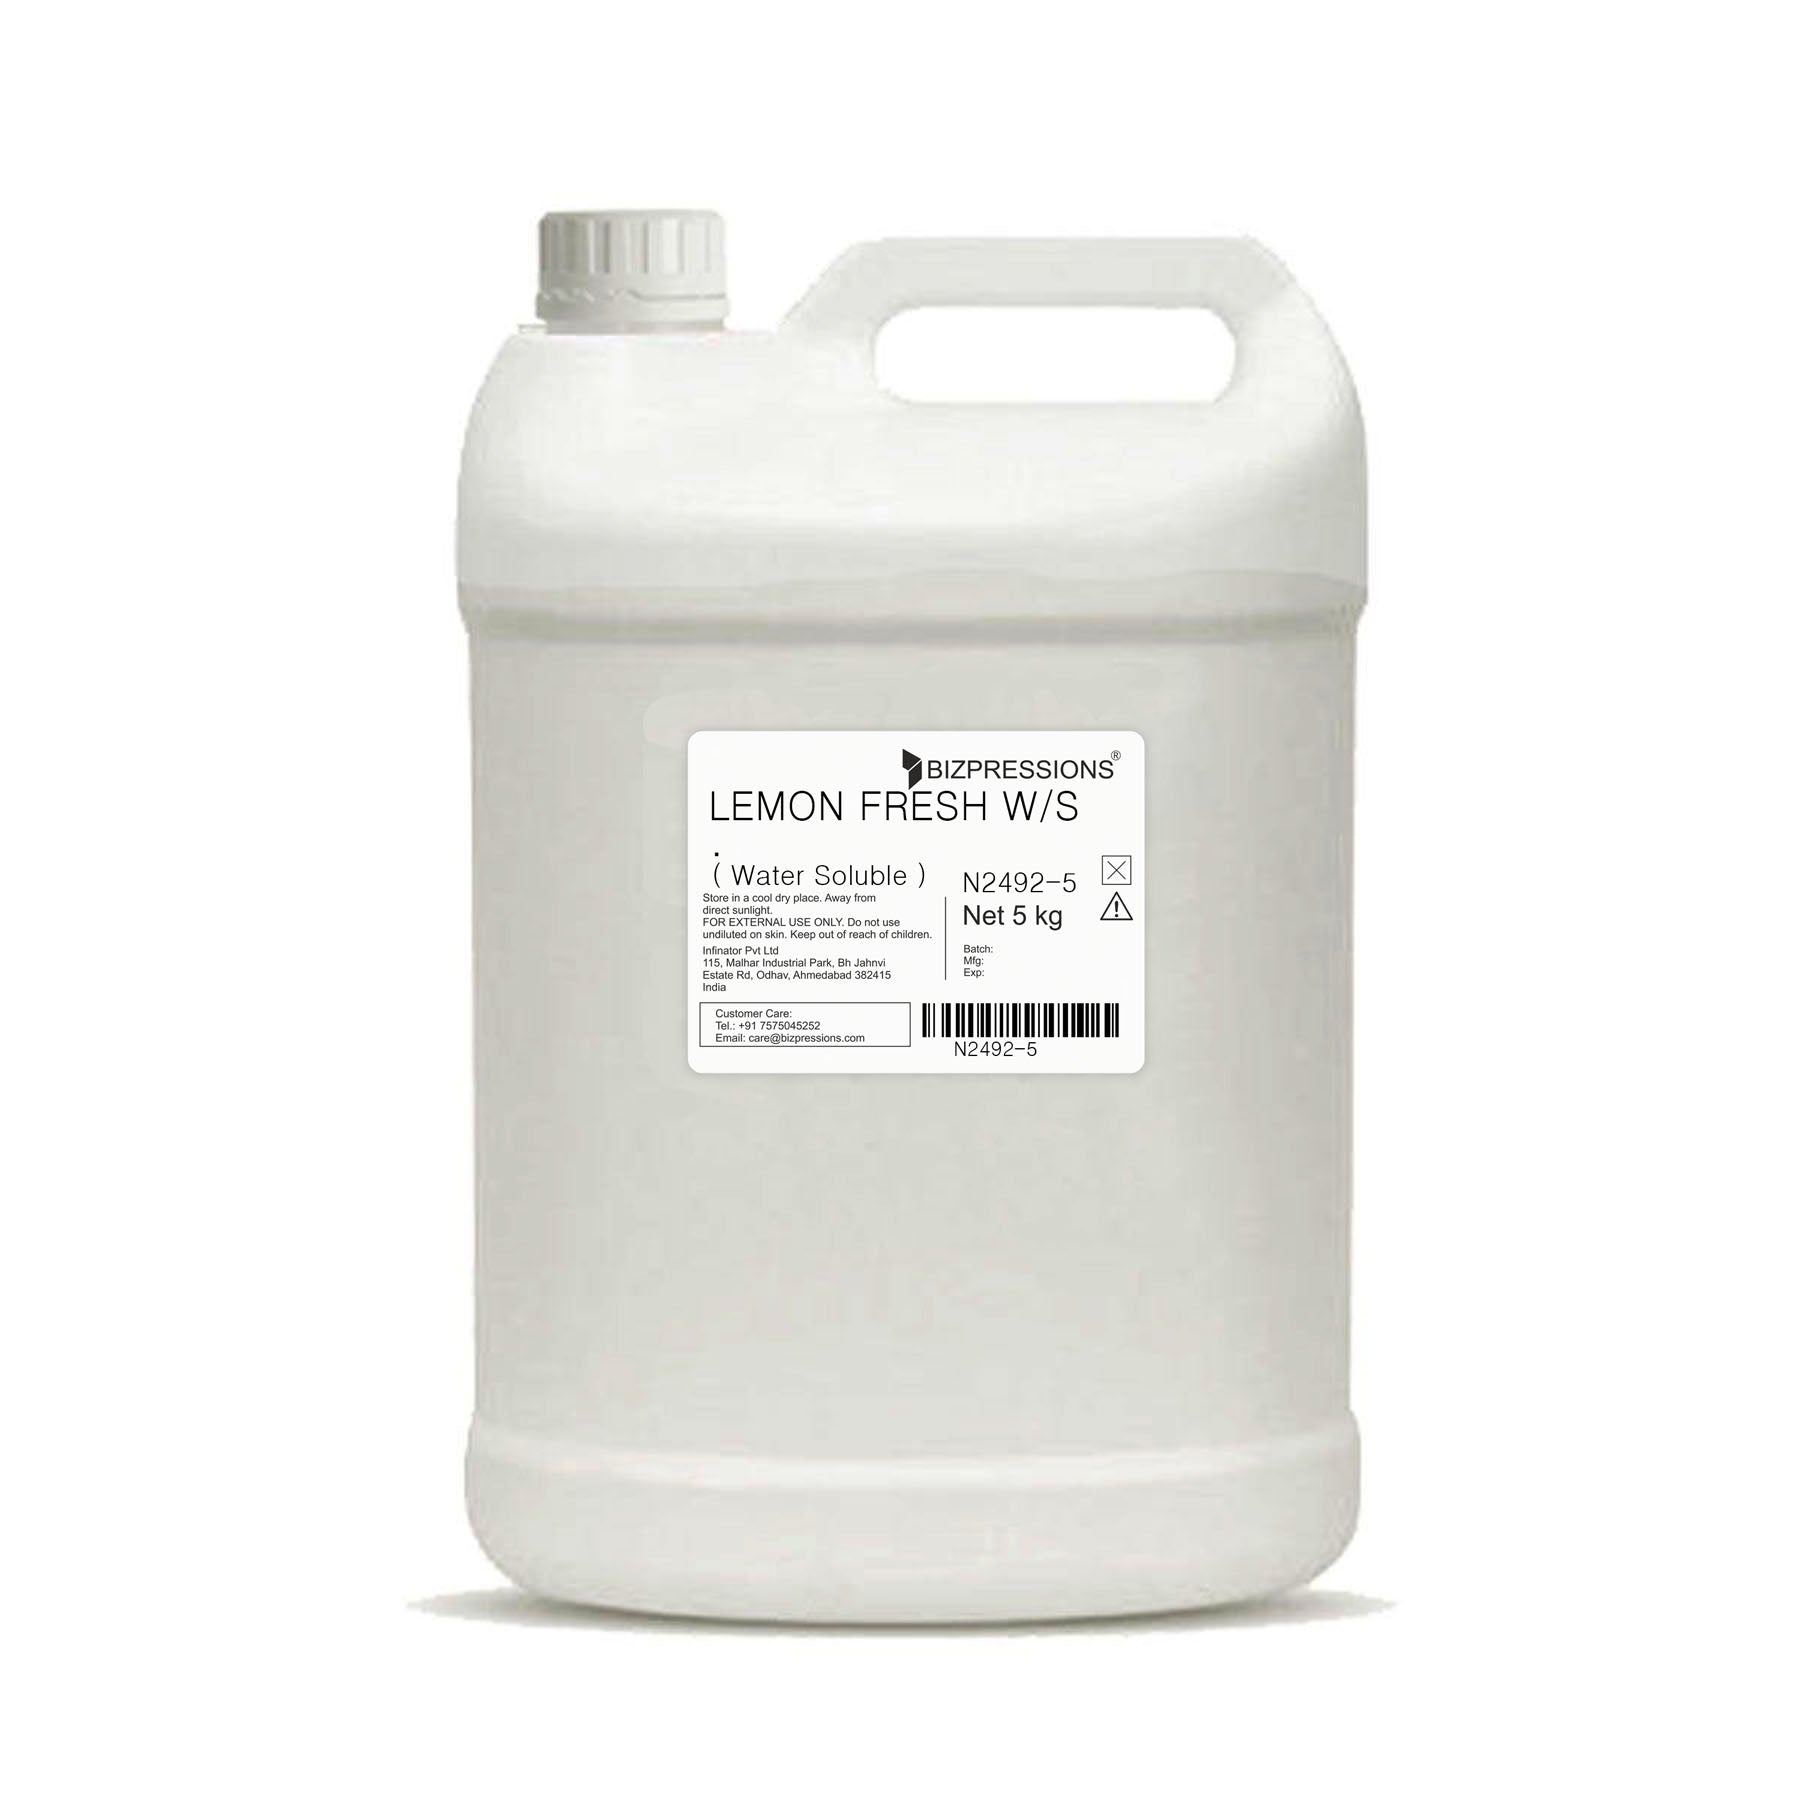 LEMON FRESH W/S - Fragrance ( Water Soluble ) - 5 kg